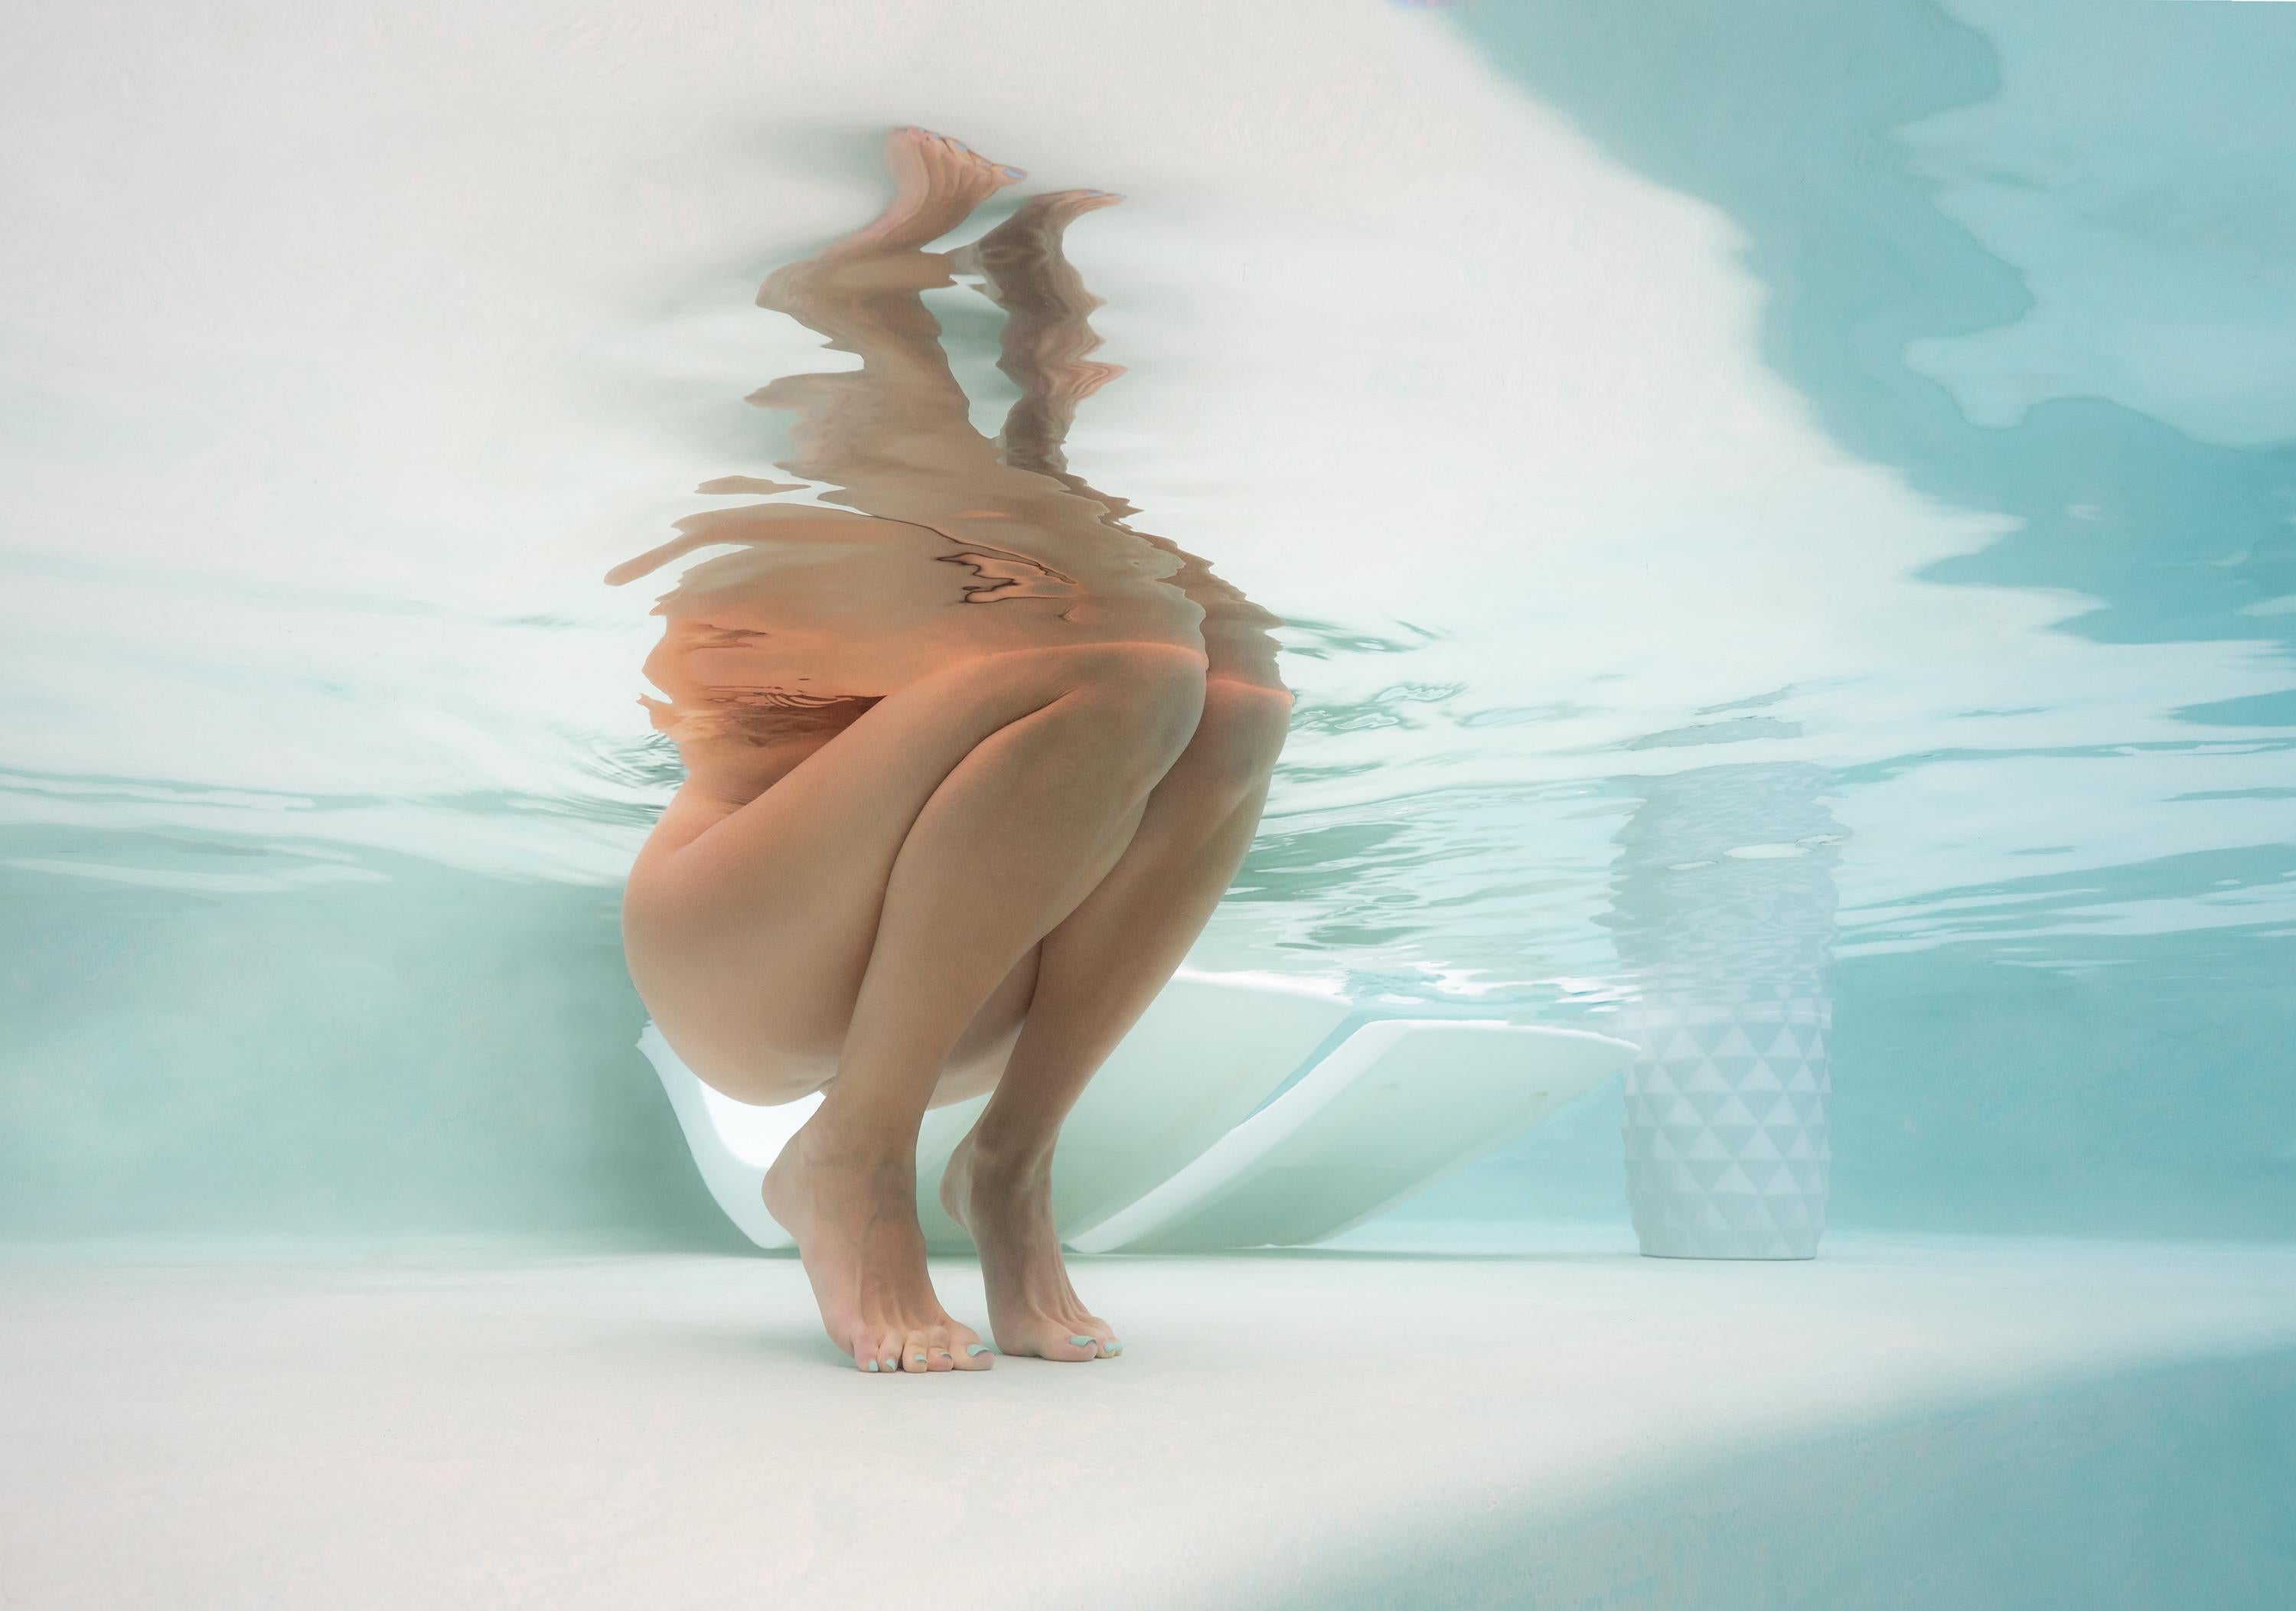 Alex Sher Figurative Photograph - Pristine - underwater nude photograph - archival pigment print 24.5 x 35"